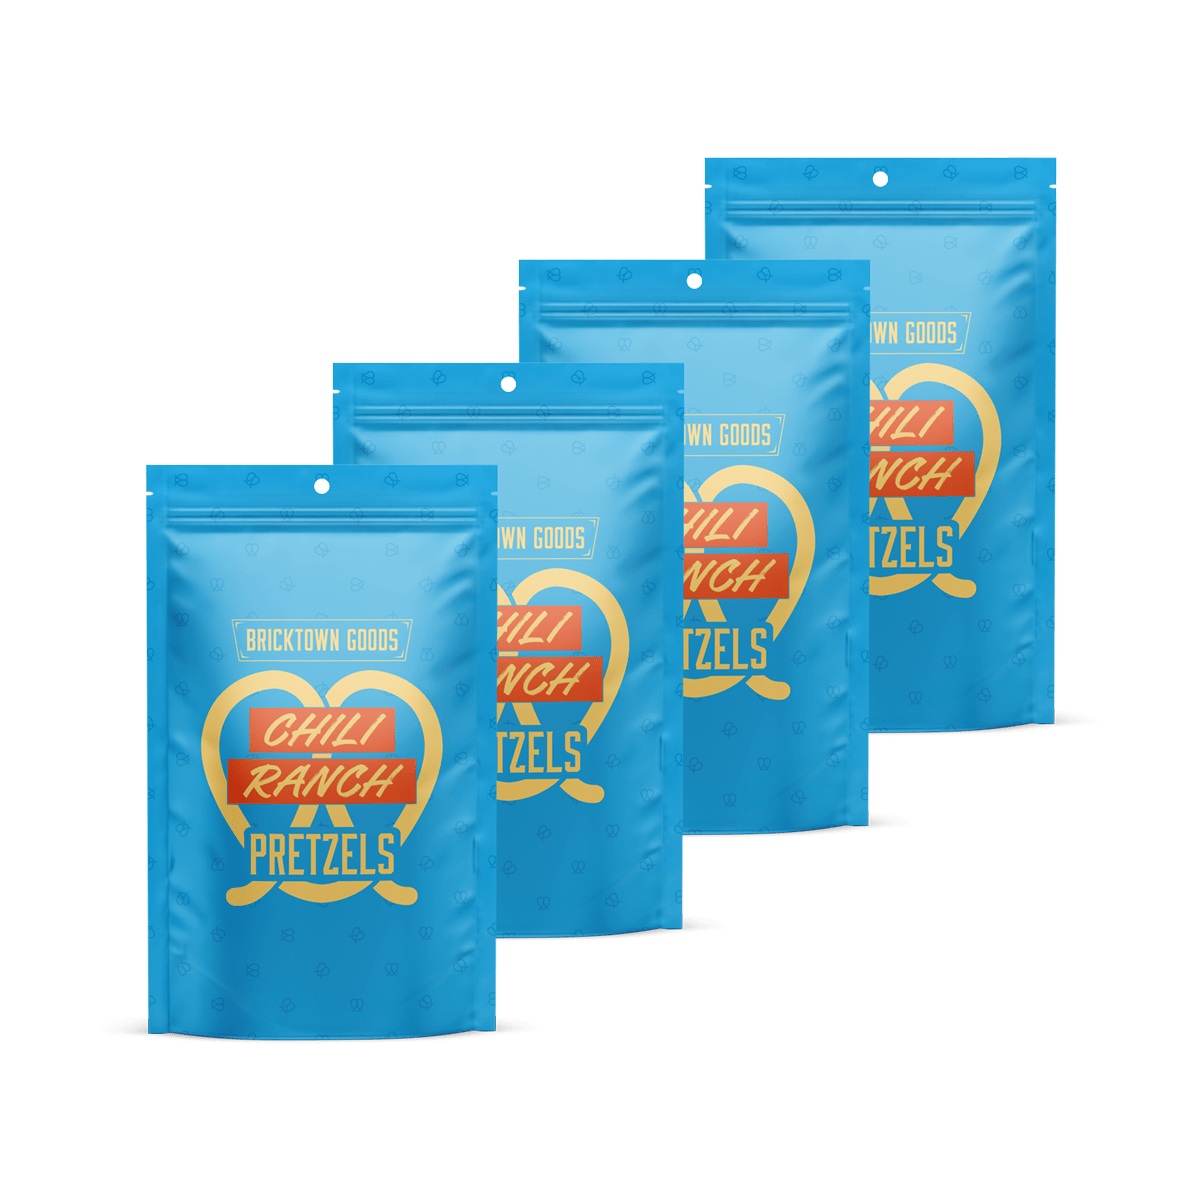 Flavored Pretzels - Chili Ranch by Bricktown Roasters